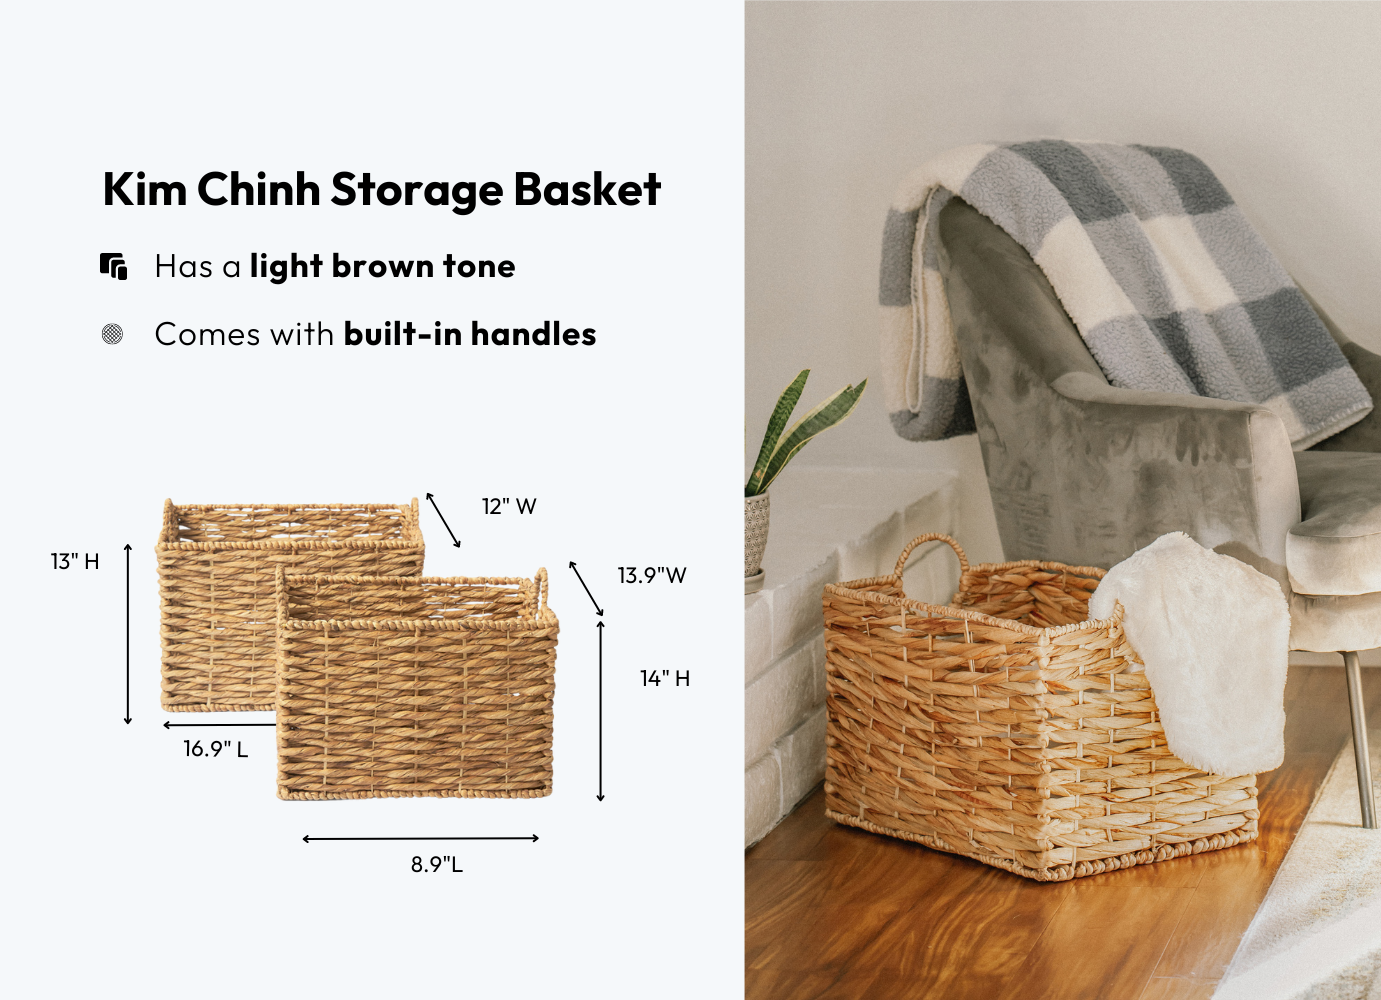 Kim Chinh storage basket